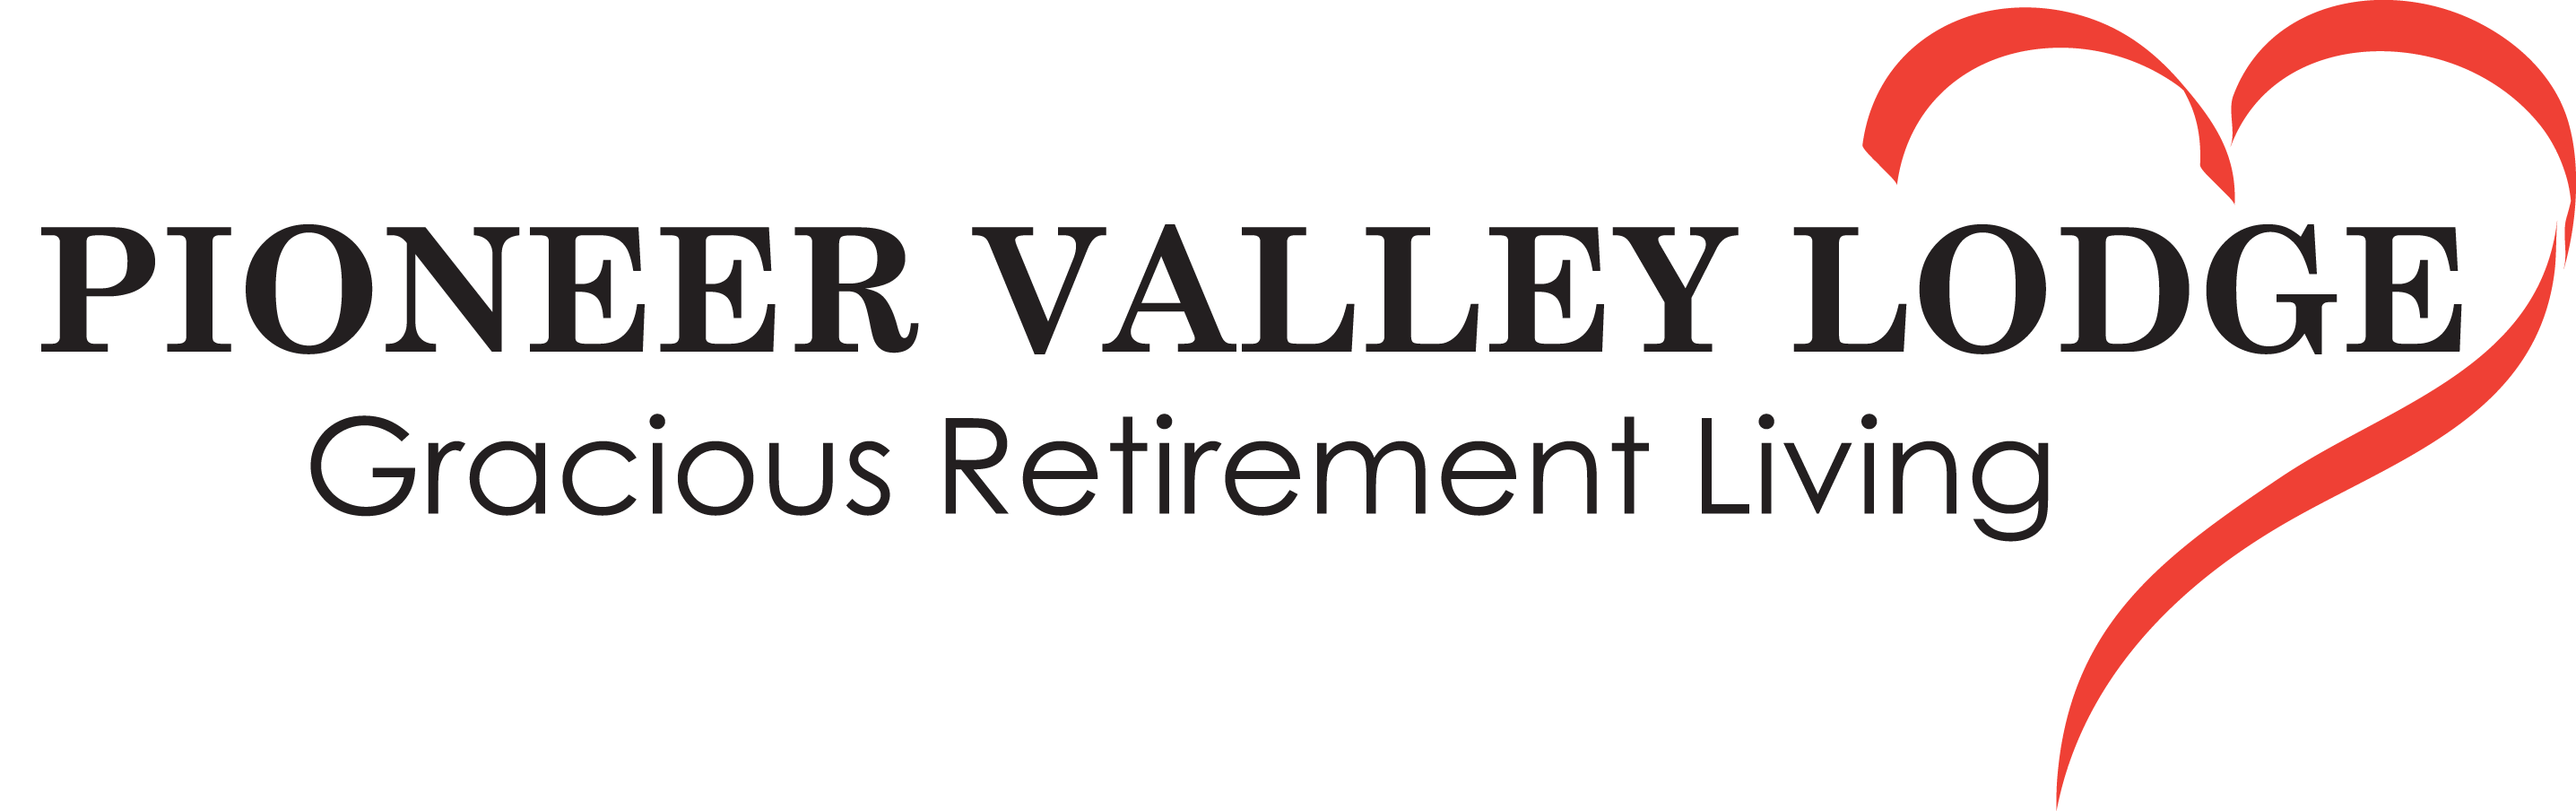 Pioneer Valley Lodge logo